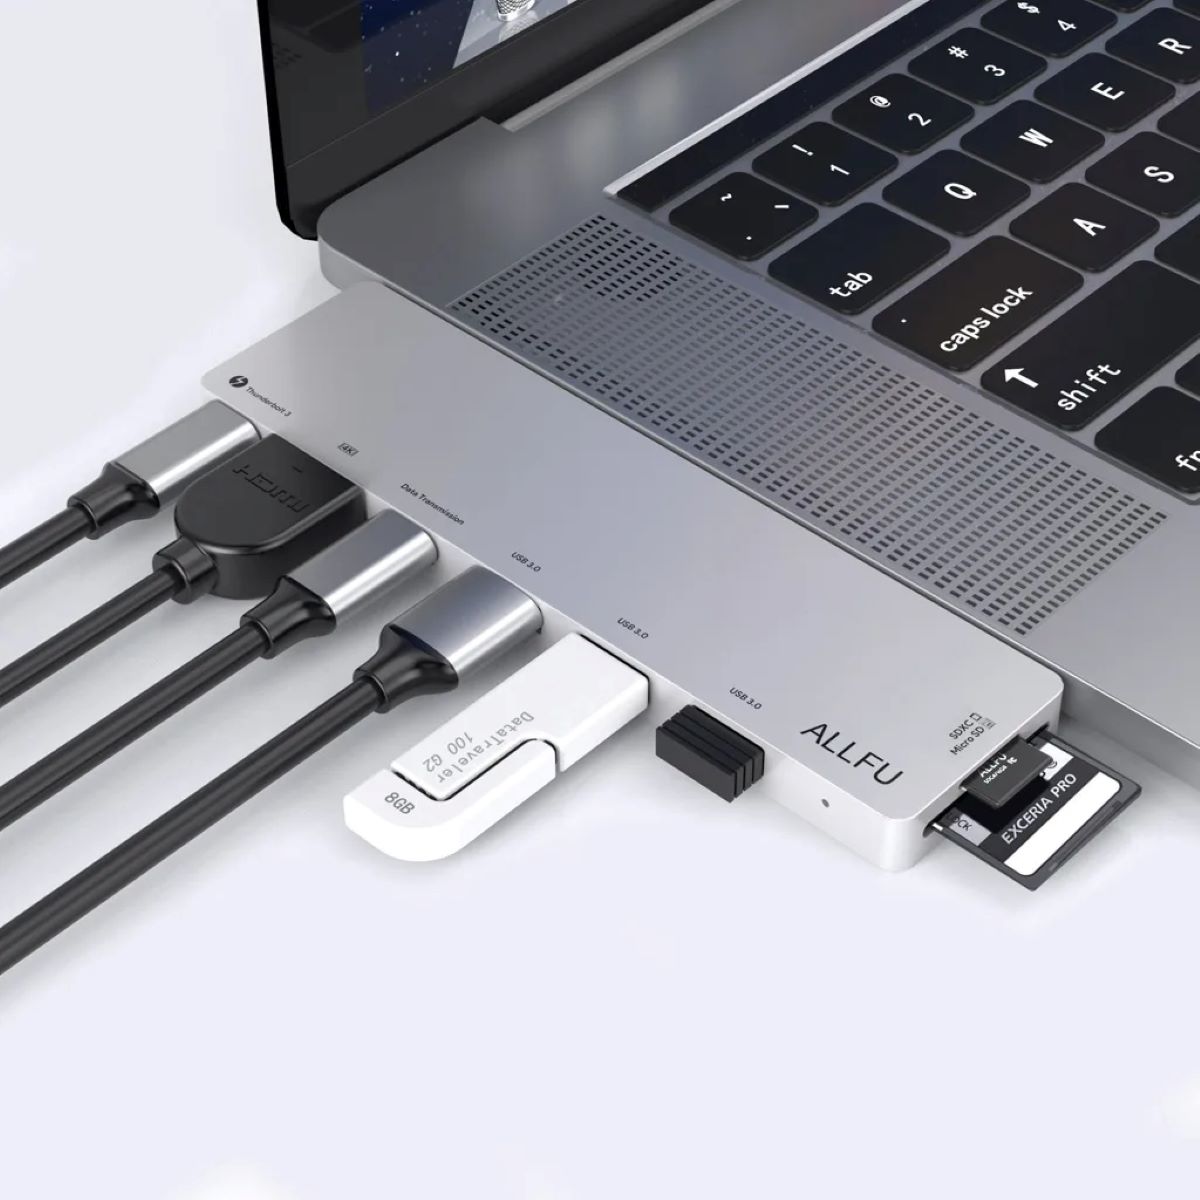 How Do I Know If My USB Hub Is Powered